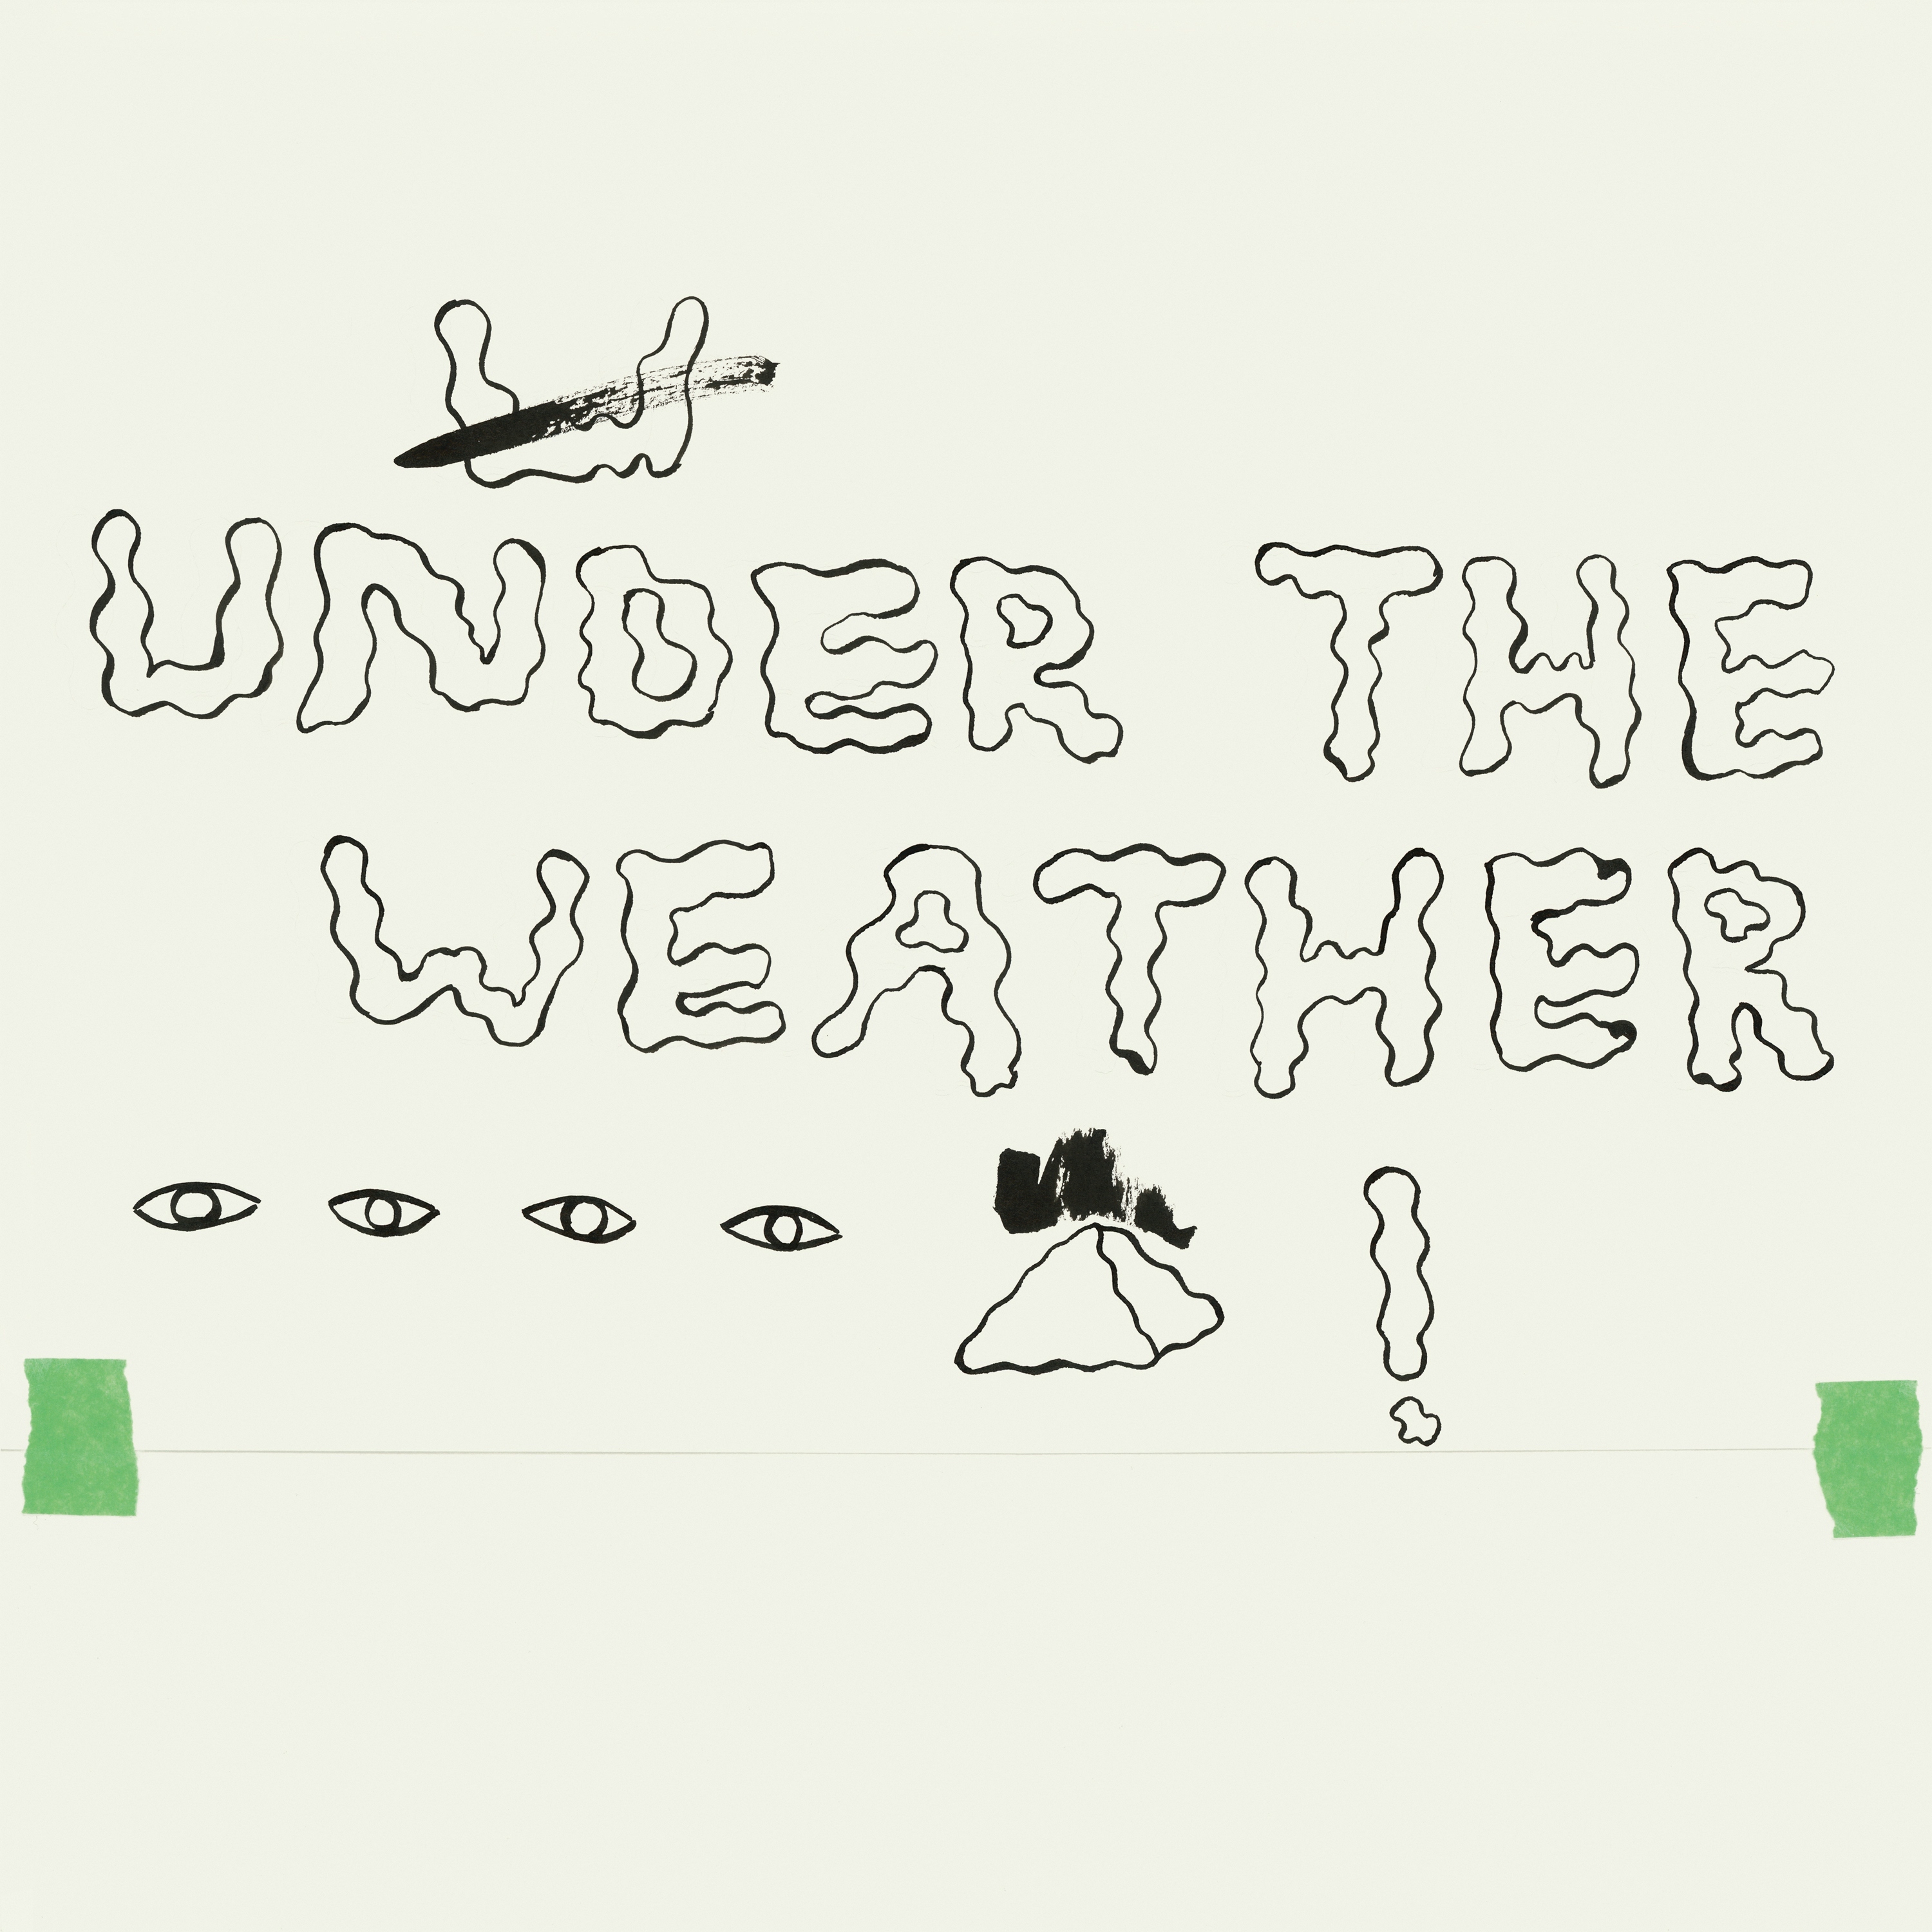 Album artwork for Album artwork for Under the Weather by Homeshake by Under the Weather - Homeshake